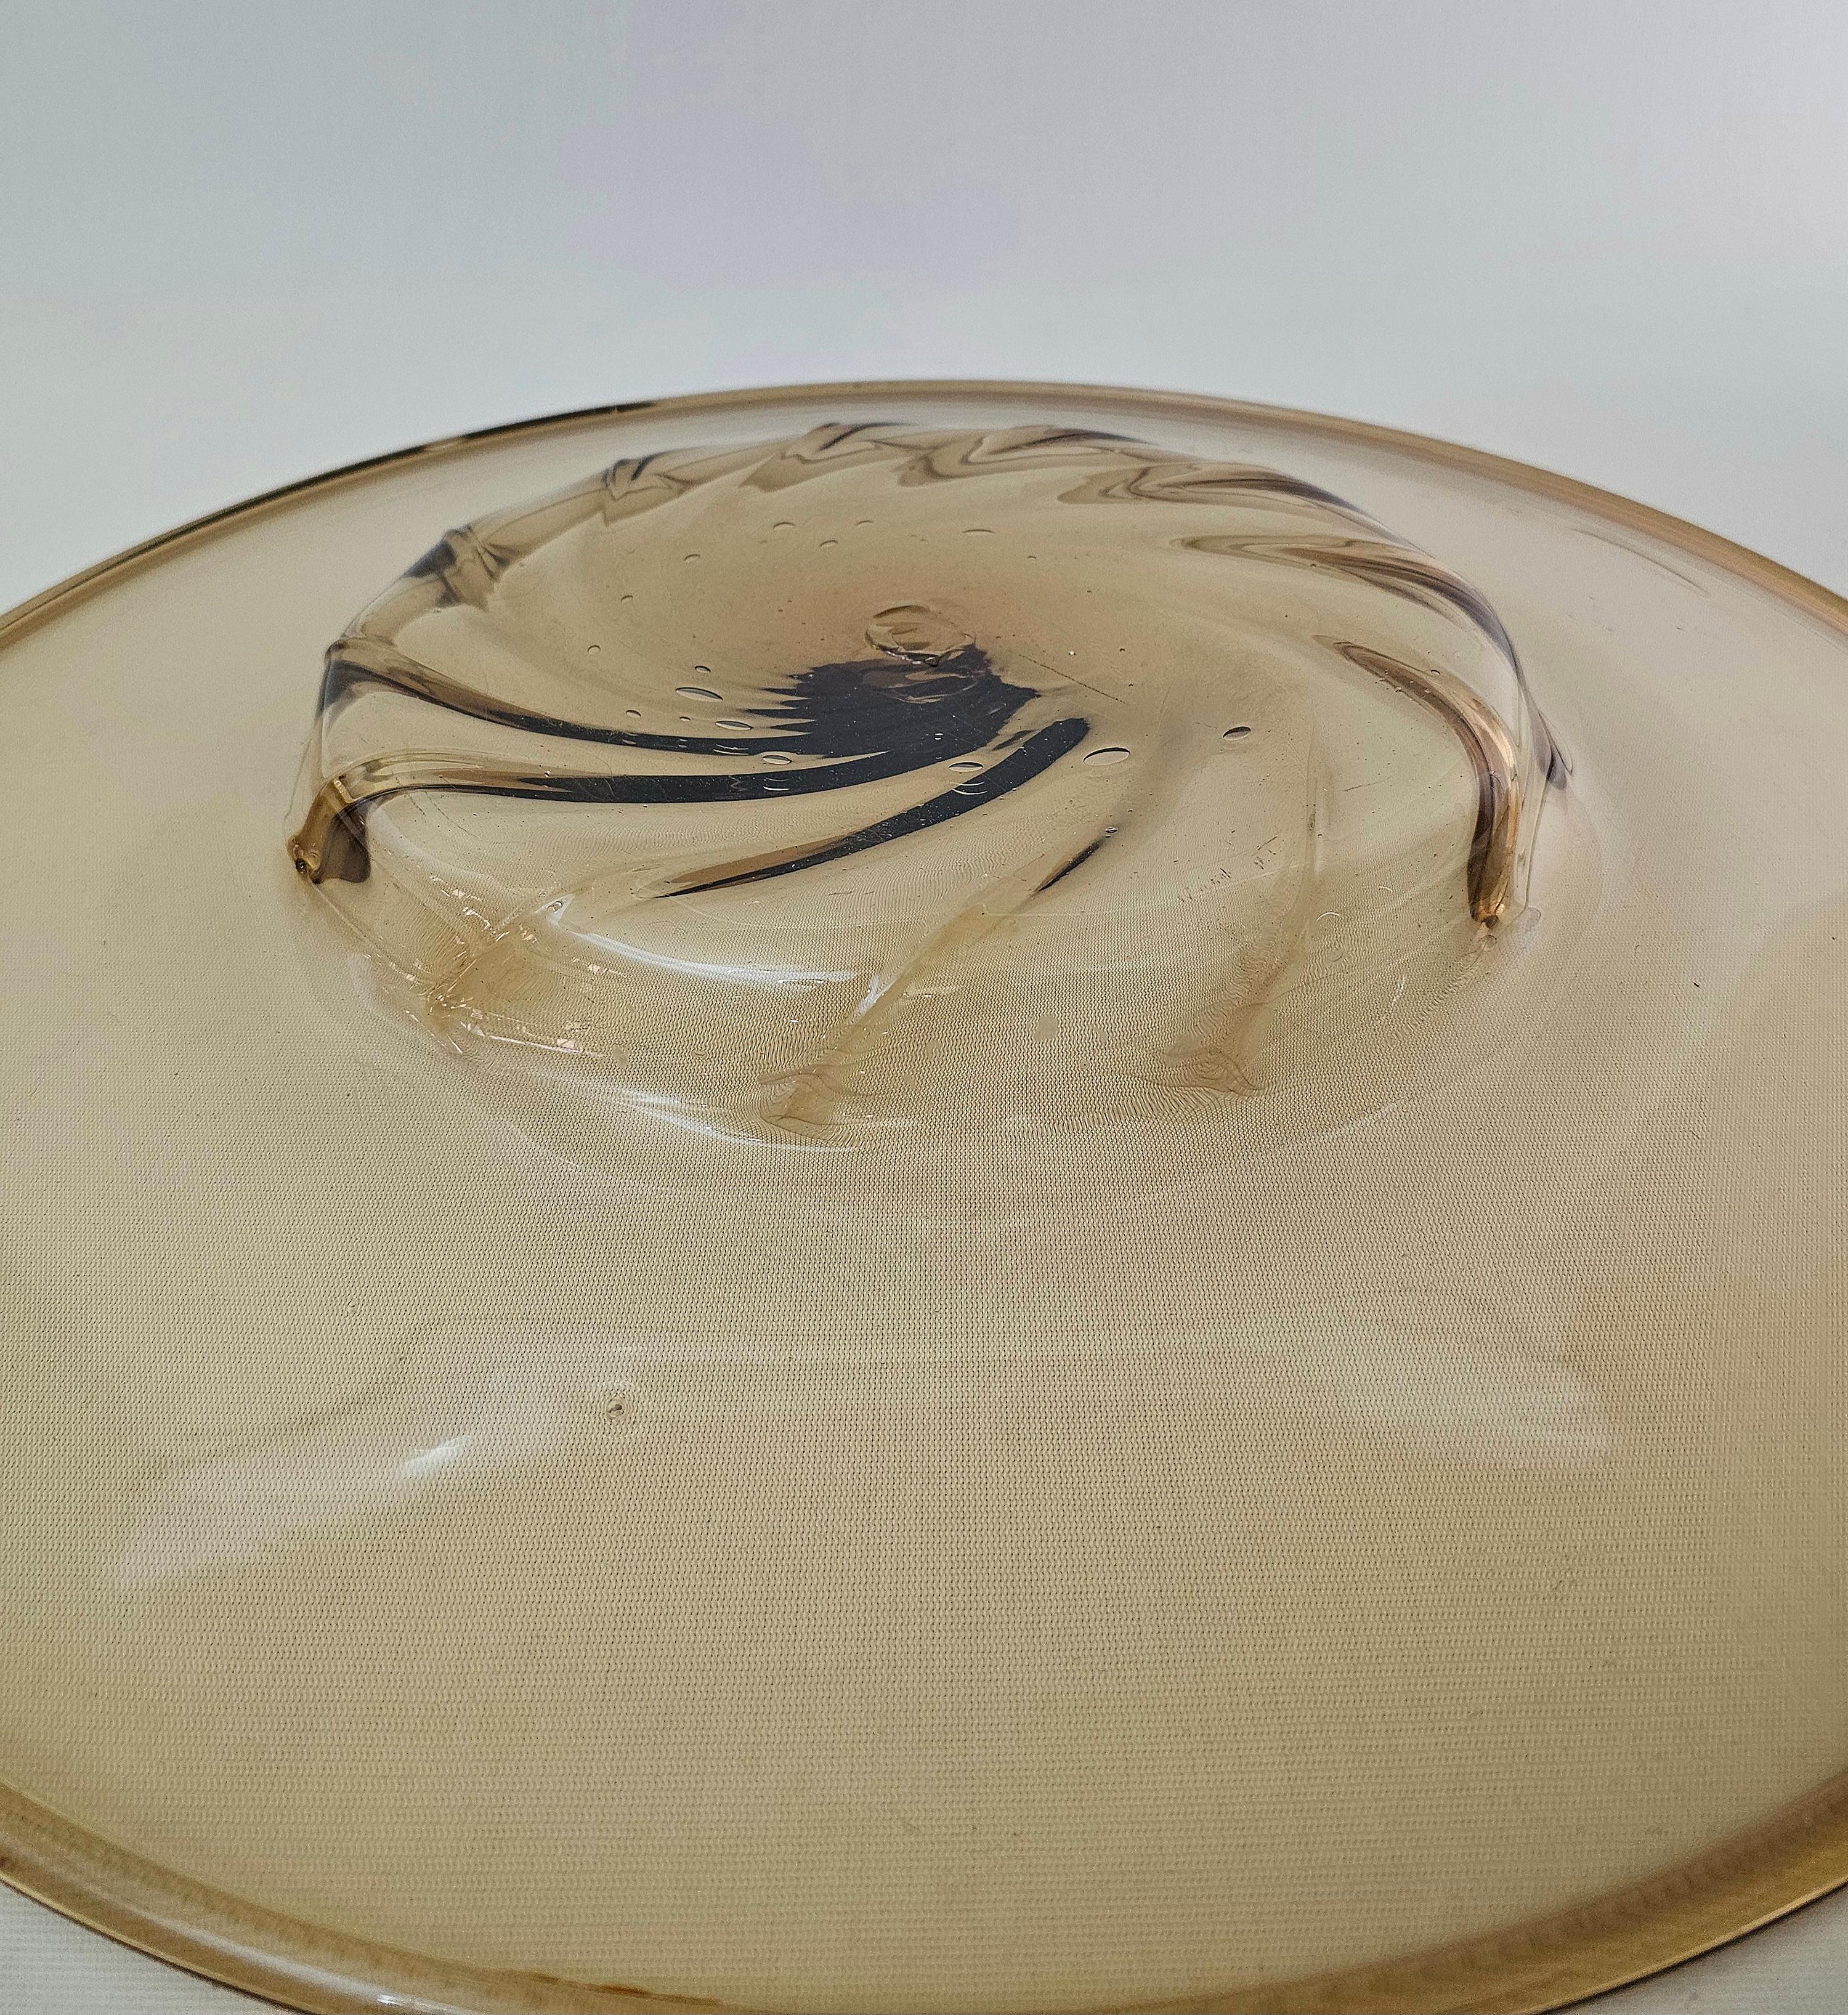 Centerpiece Murano Glass Attributable to Vittorio Zecchin Midcentury Italy 1940s For Sale 2